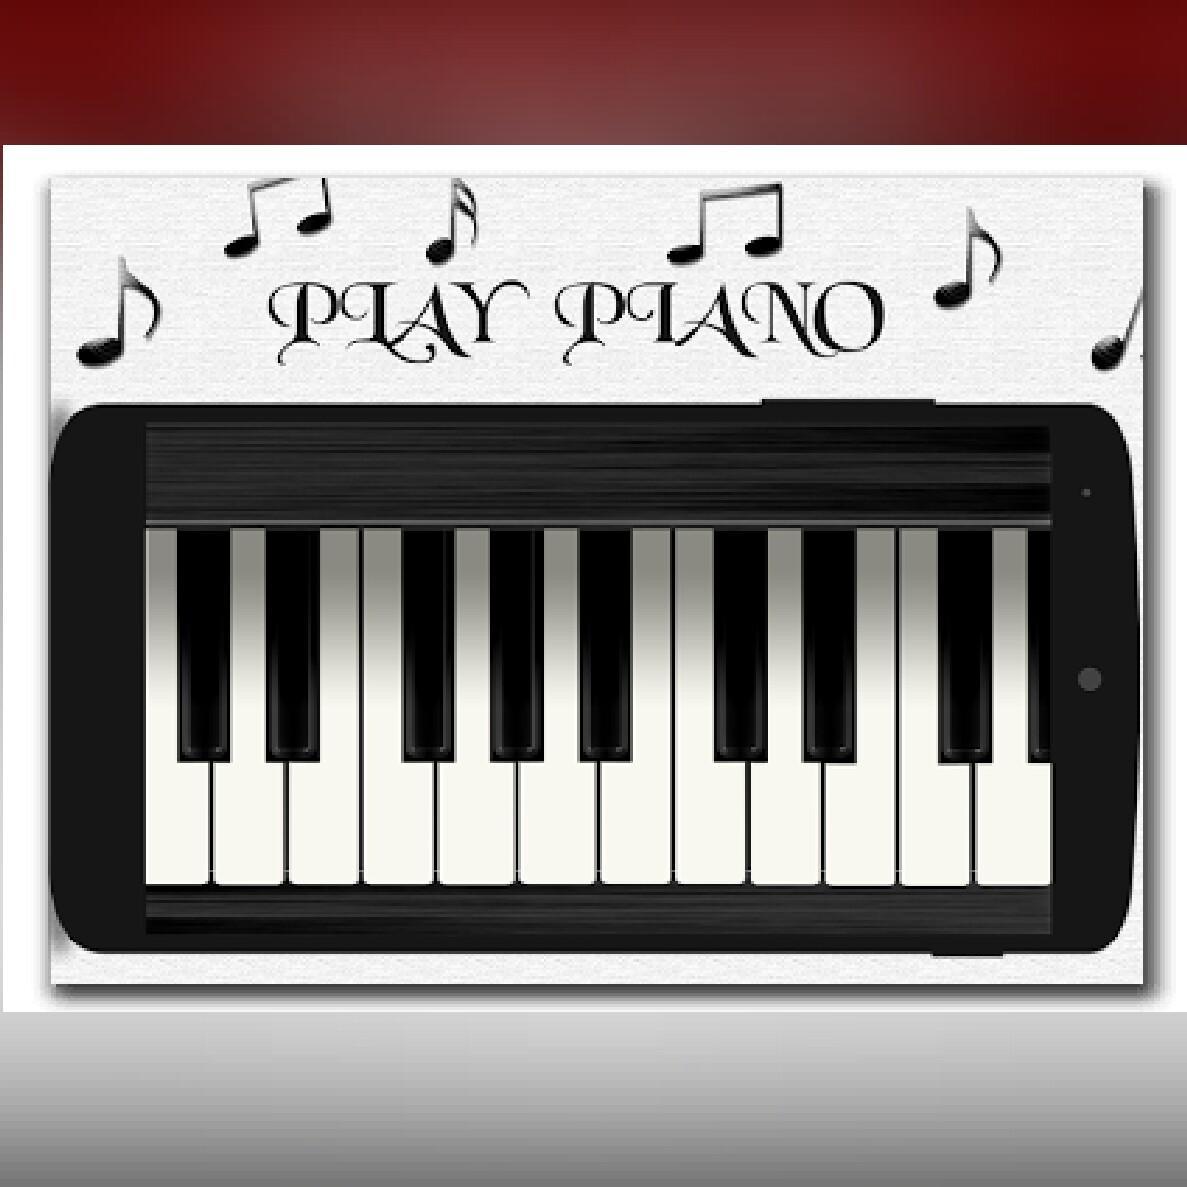 Emin Play Piano. Playable Piano rdt2. We Play рояль. Play Piano маленькая картинка. Piano play song